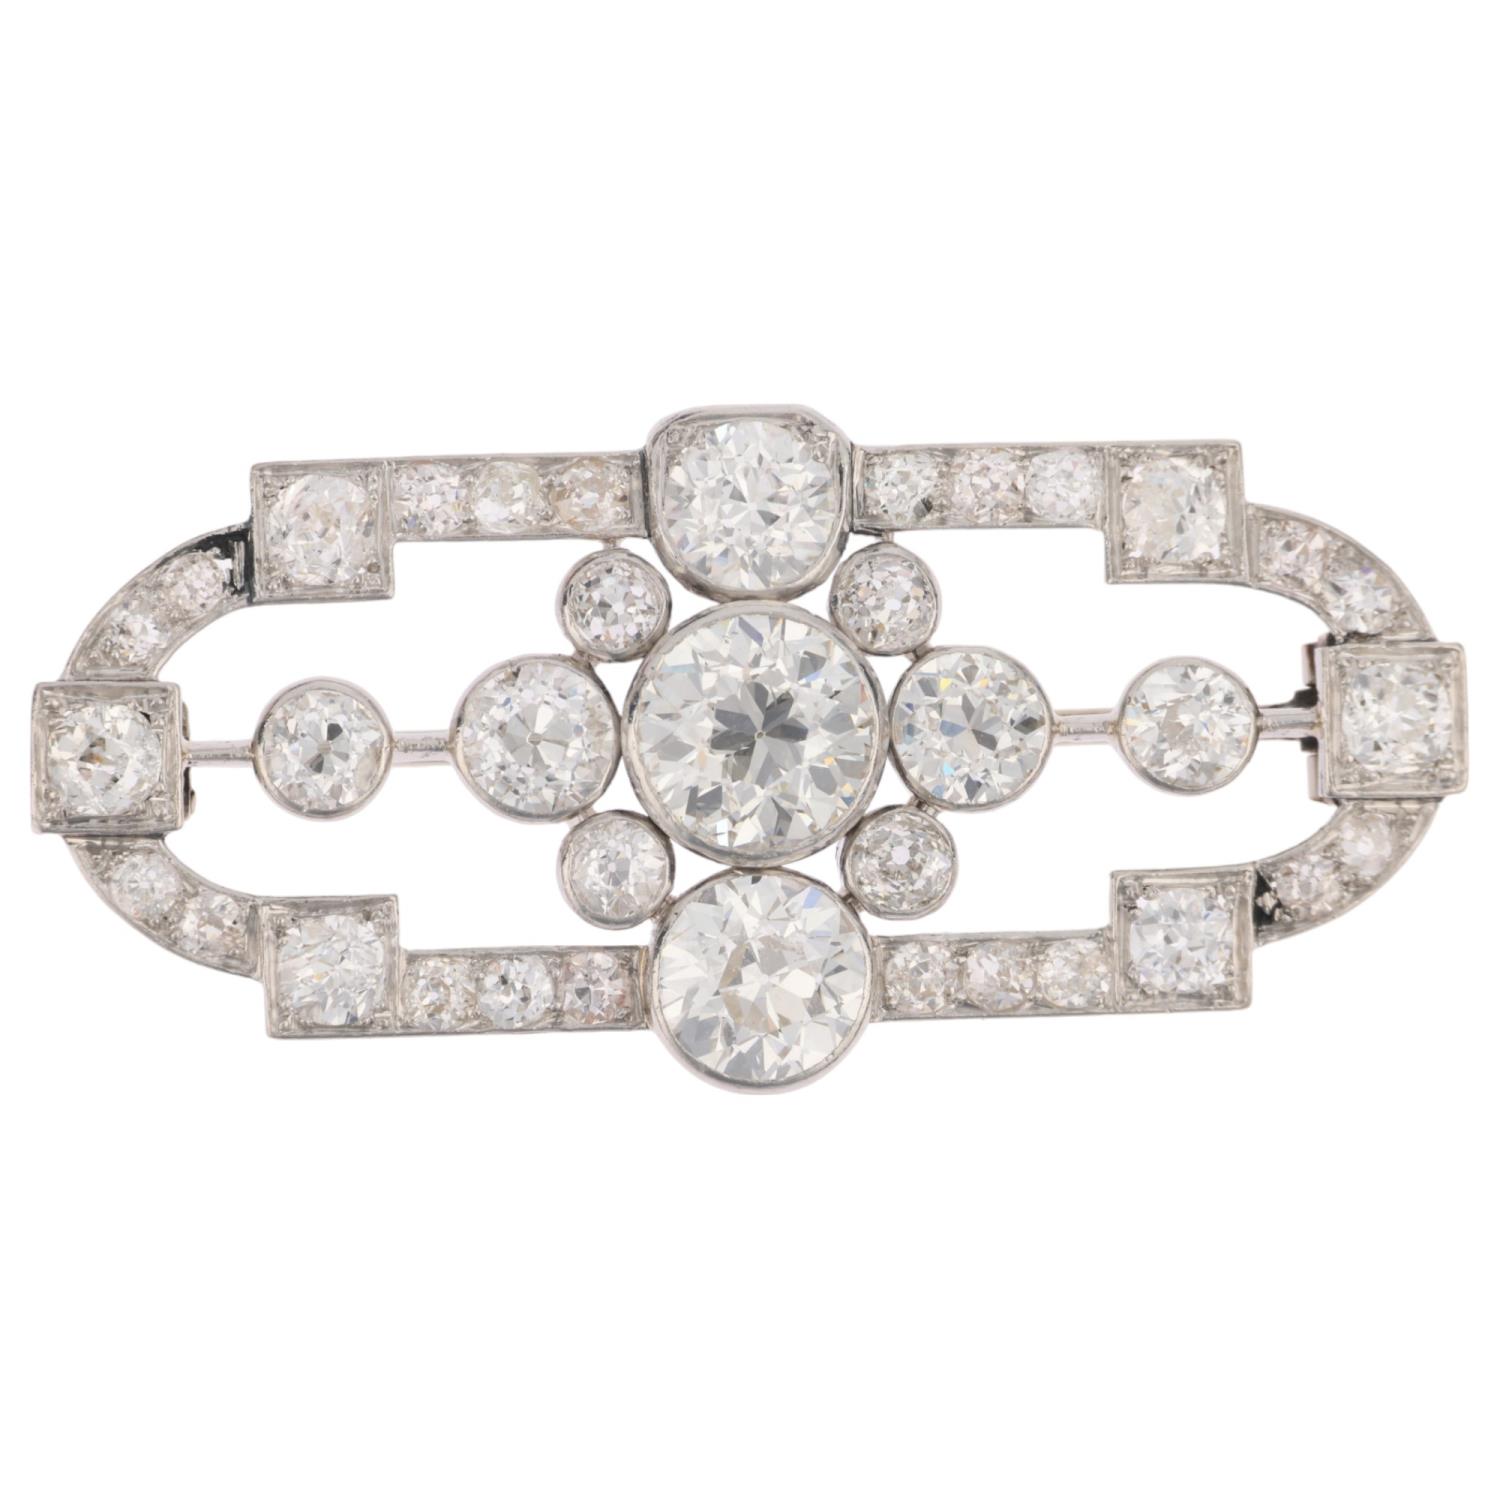 An Art Deco diamond geometric panel brooch, circa 1925, total diamond content approx 7ct,